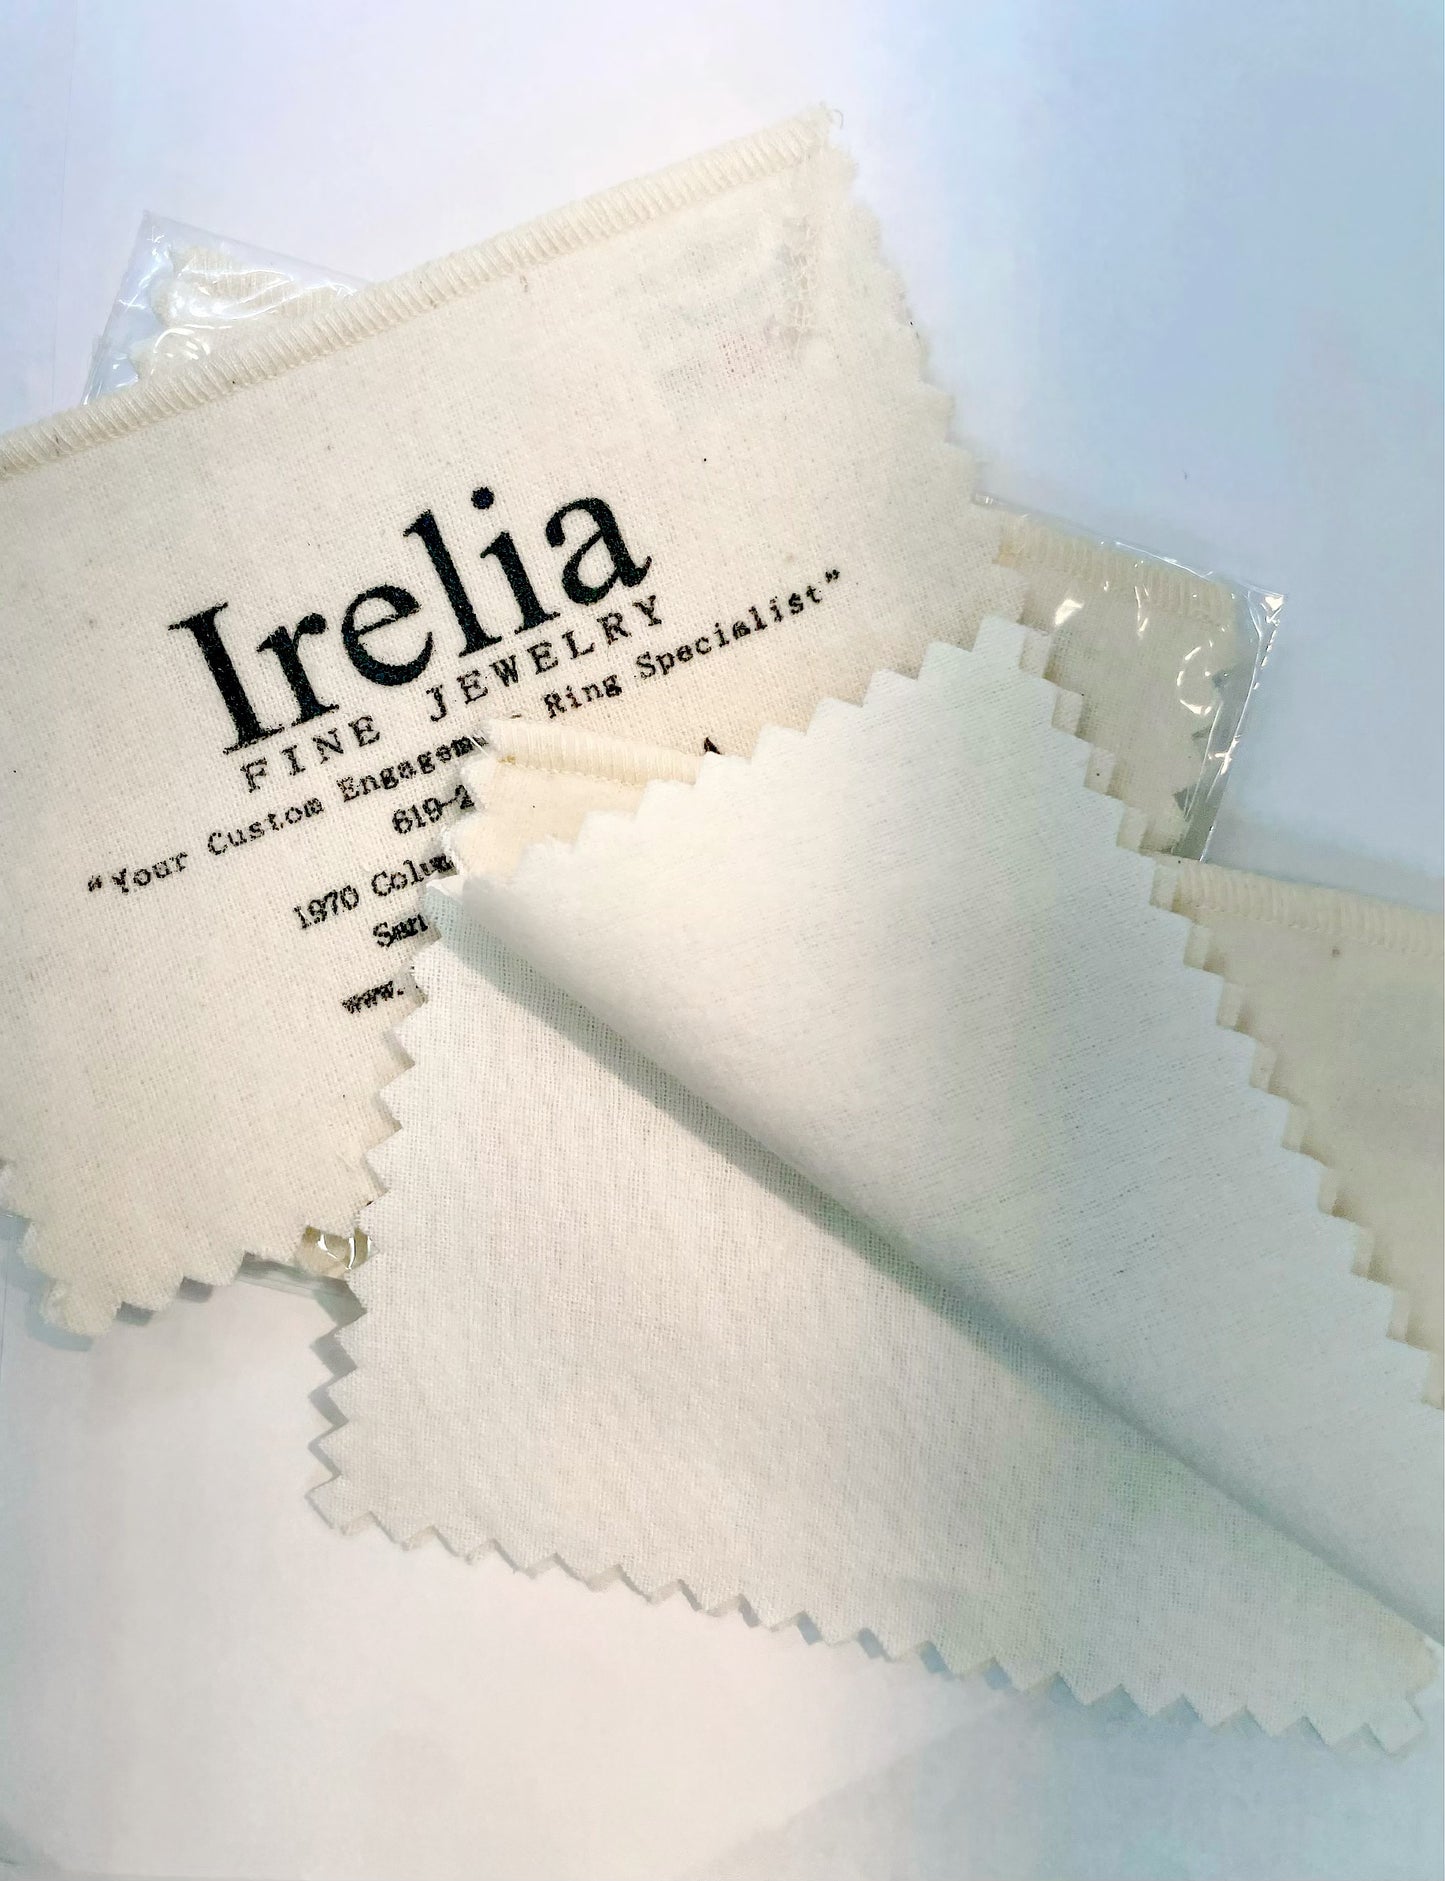 Irelia Fine Jewelry Cleaning Cloth